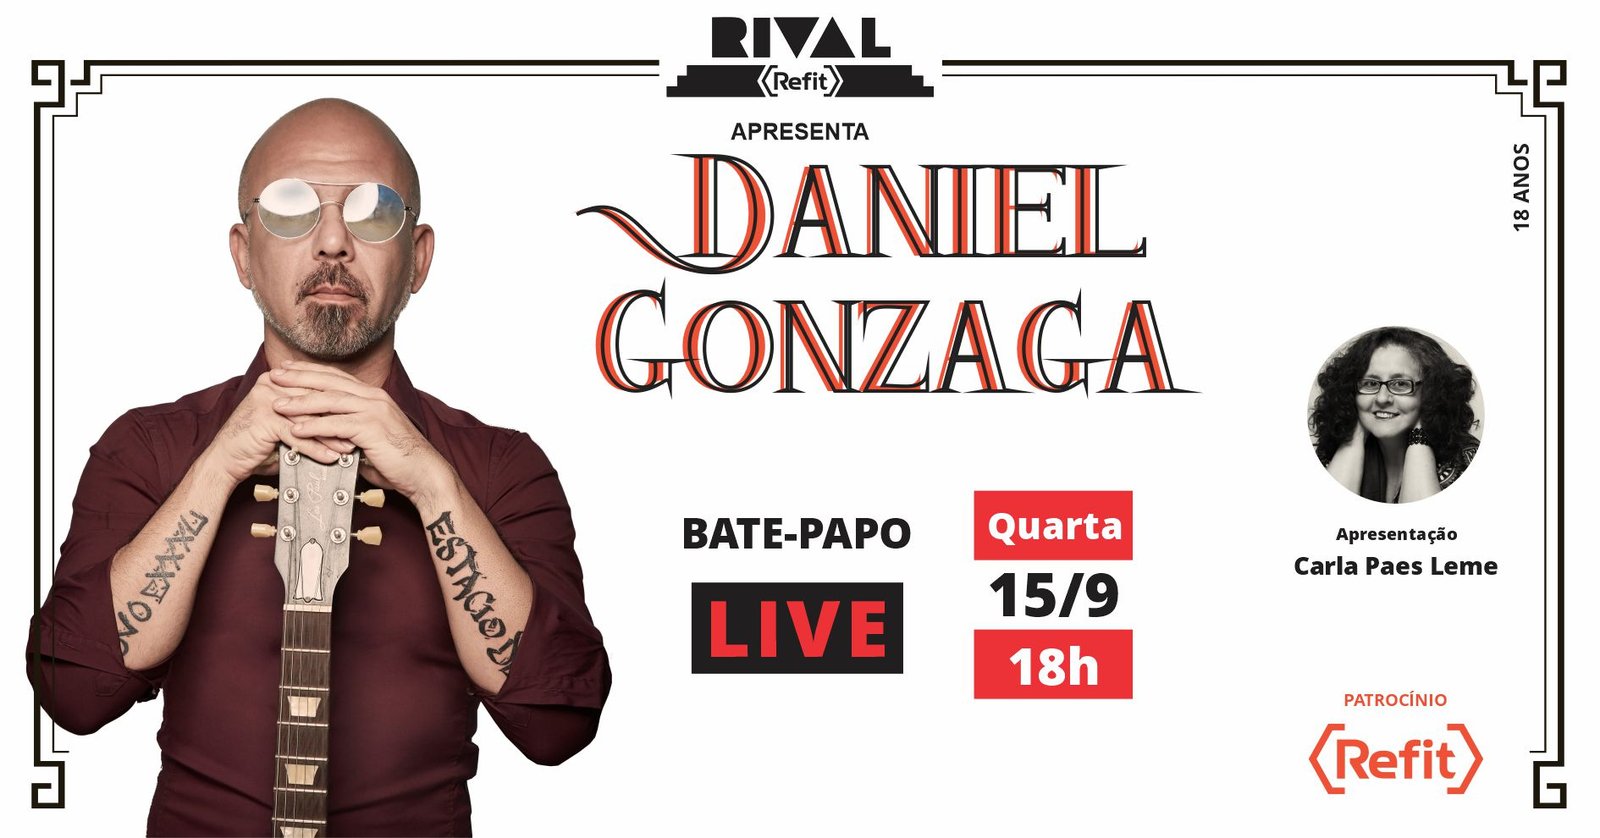 Bate-papo com Daniel Gonzaga